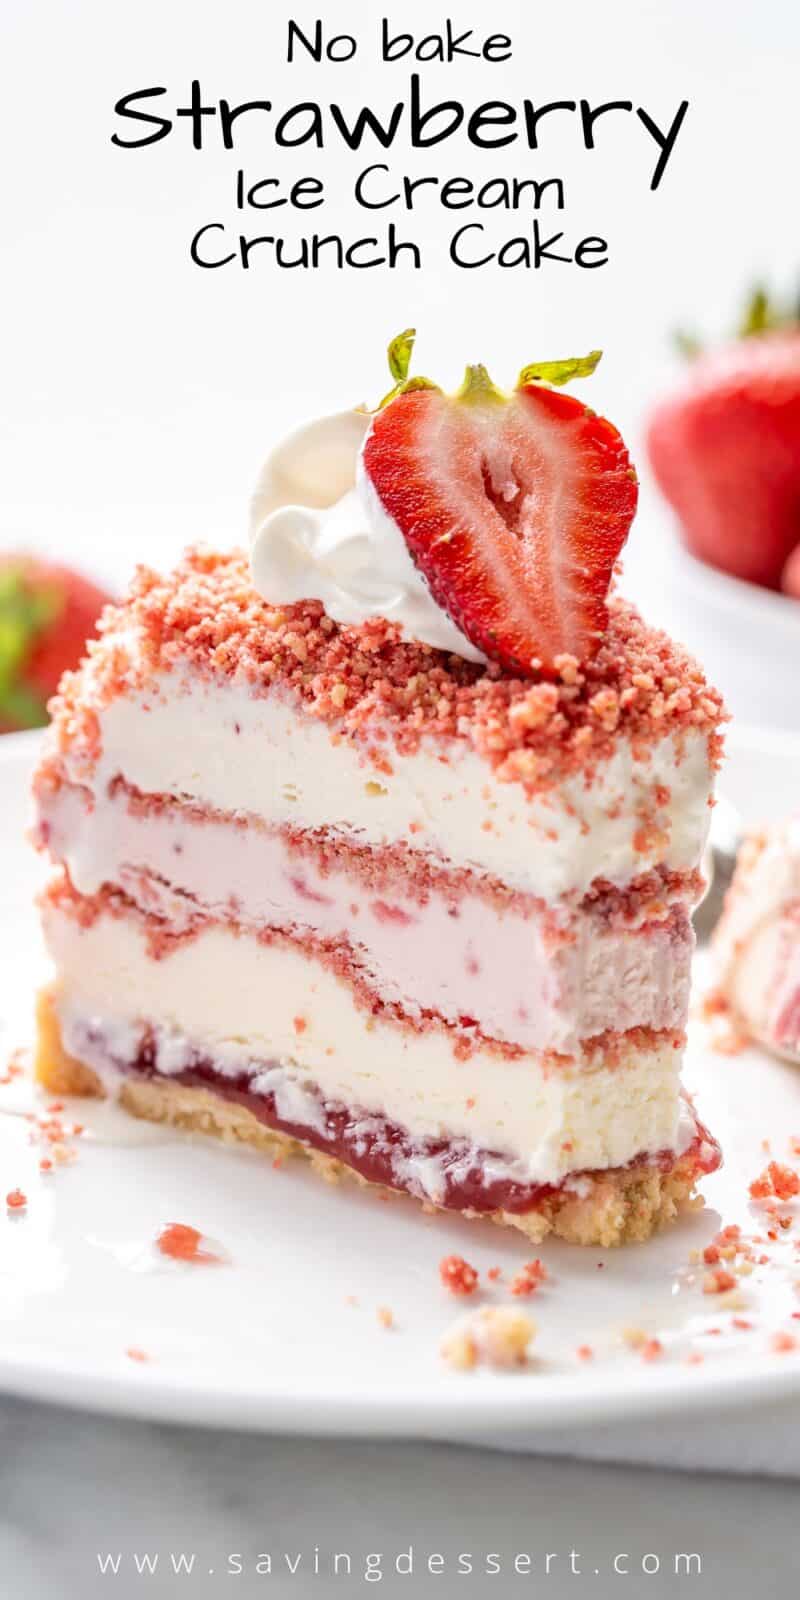 A layered Strawberry Ice Cream Crunch Cake